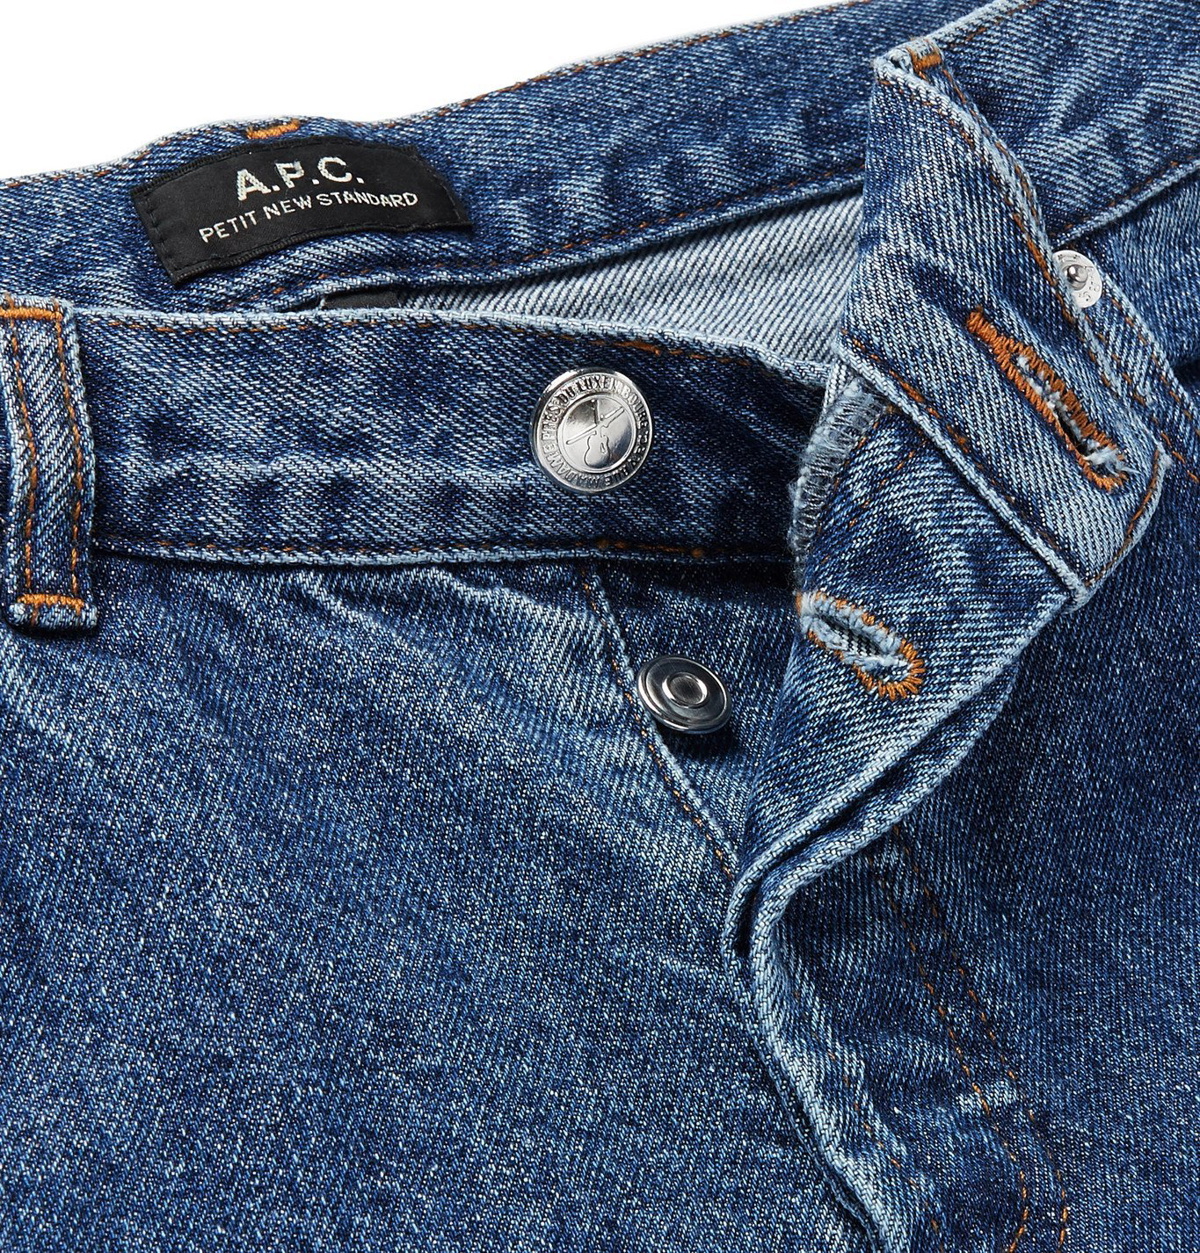 A.P.C. - Petit New Standard Slim-Fit Denim Jeans - Blue A.P.C.